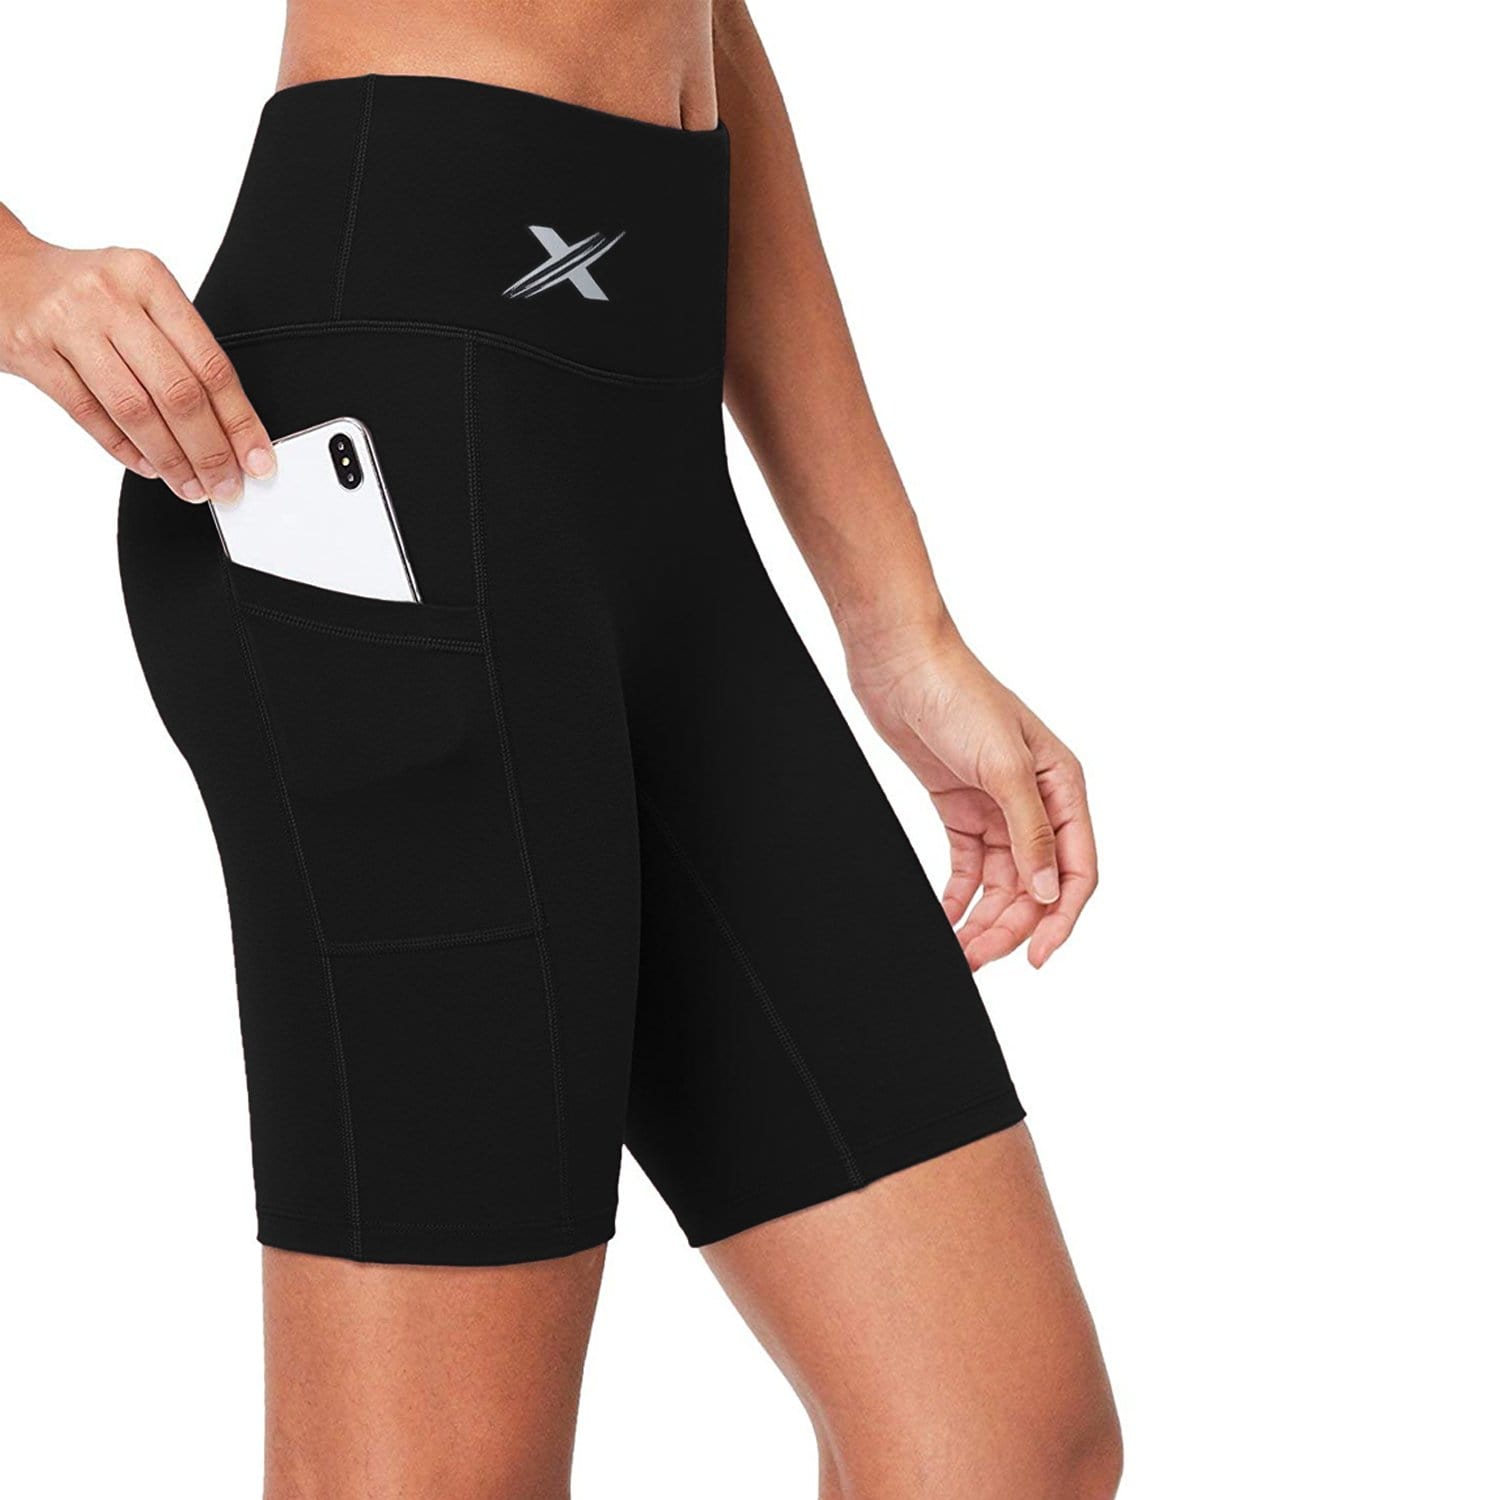 Workout Spandex Shorts for Women, High Waist Soft Yoga Bike Shorts, Blue, XL